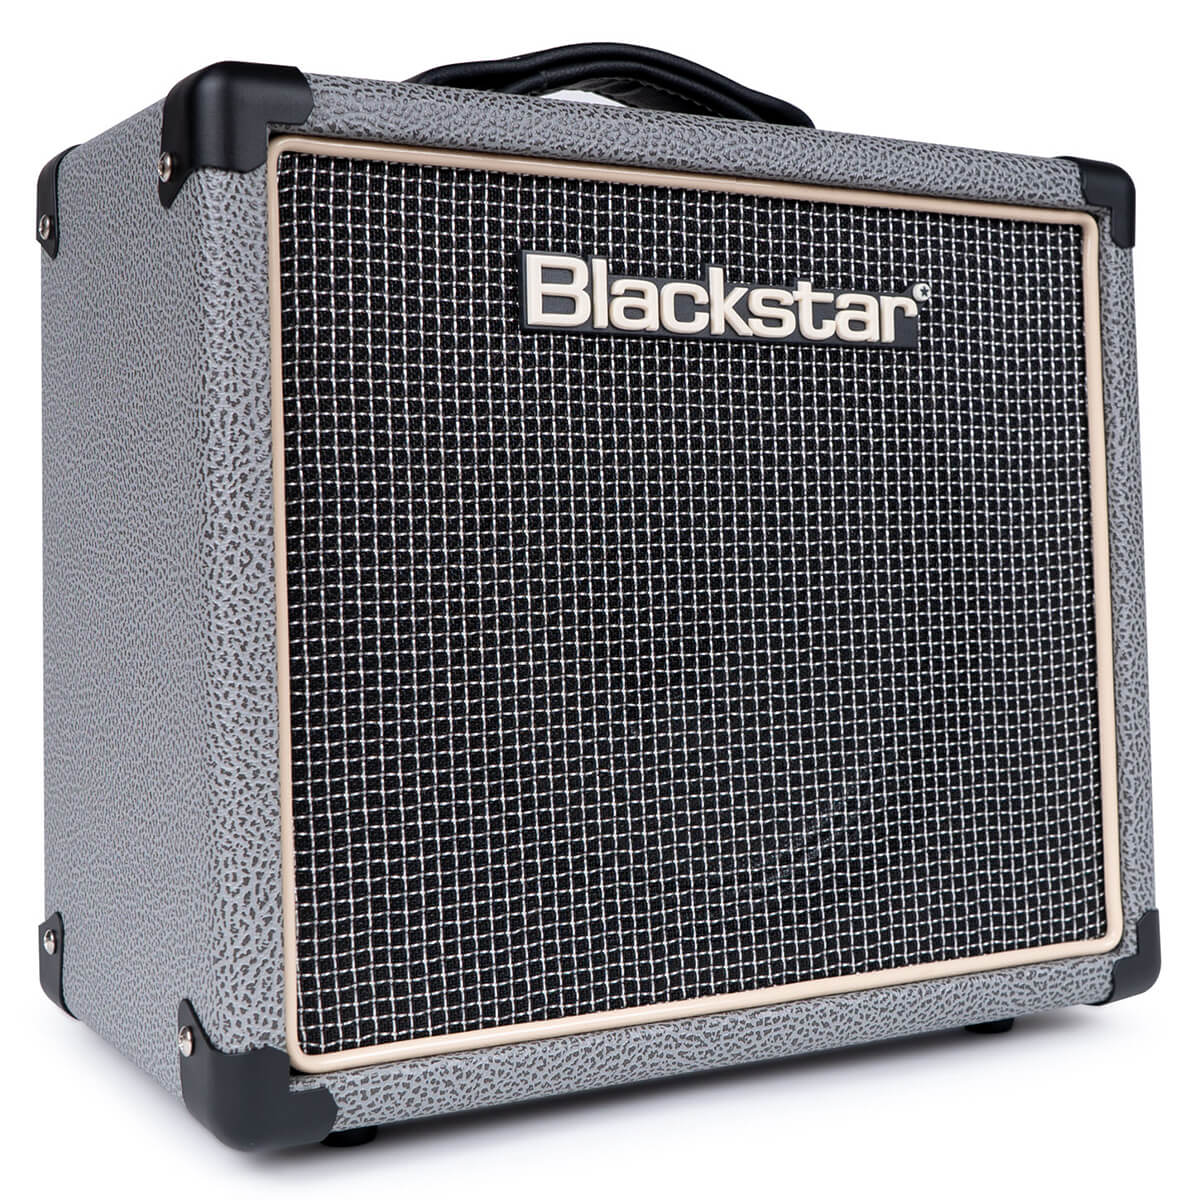 Blackstar HT1R MkII 1x8" 1-watt Tube Combo Amp with Reverb - Bronco Grey